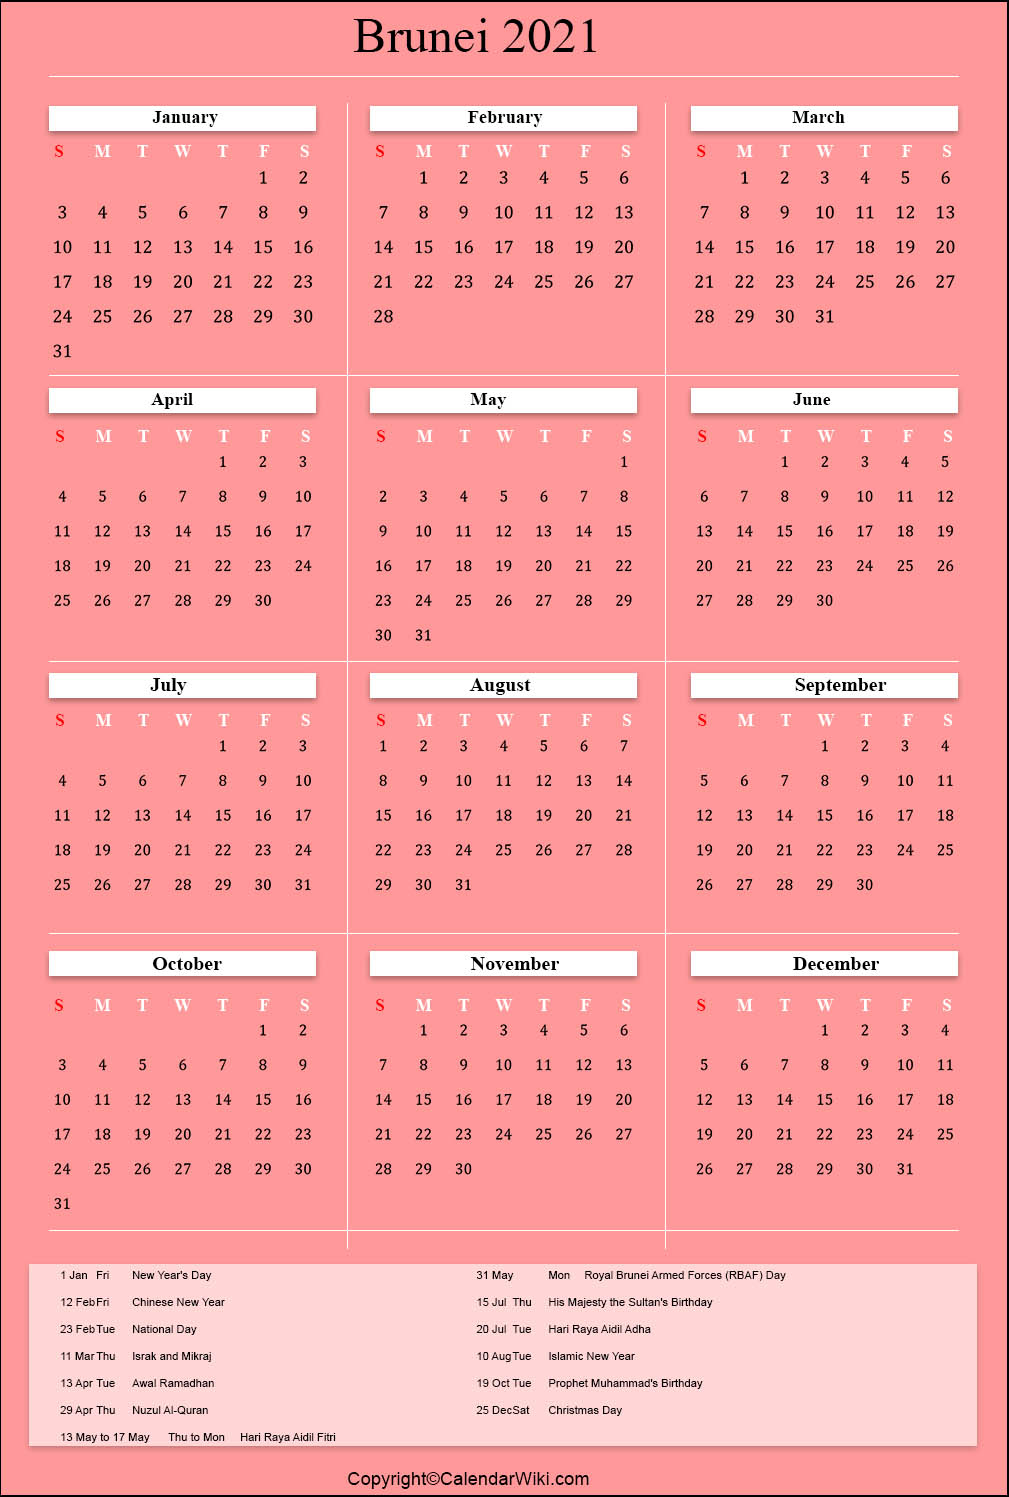 Printable Brunei Calendar 2021 with Holidays [Public Holidays]